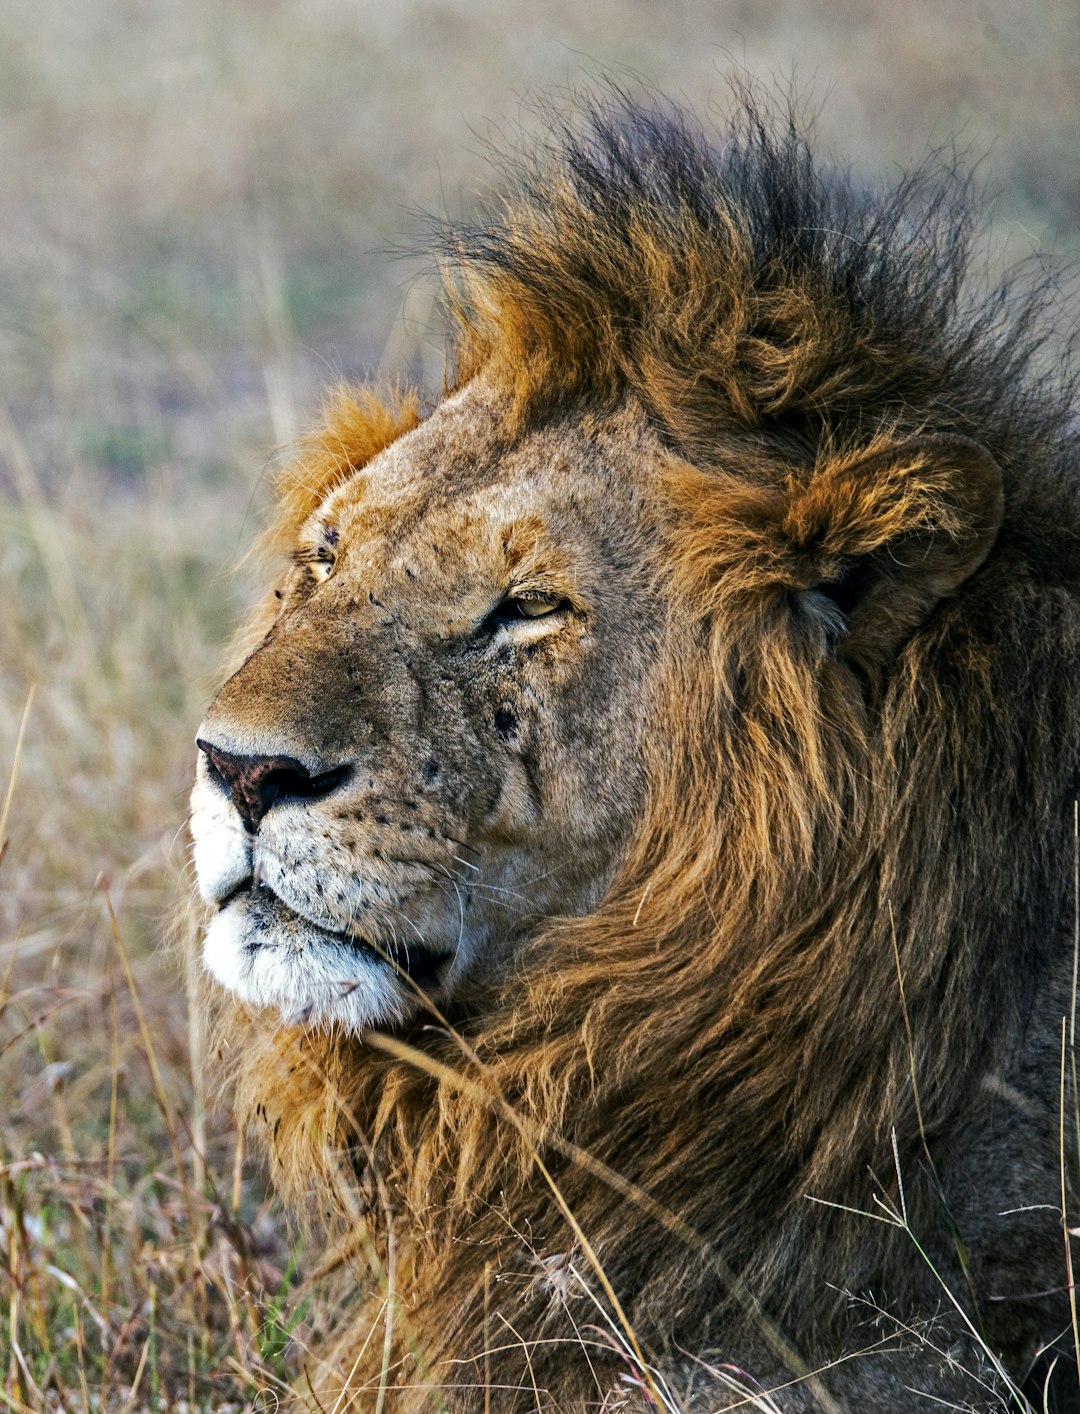 travelers stories about Wildlife in Masai Mara National Reserve, Kenya